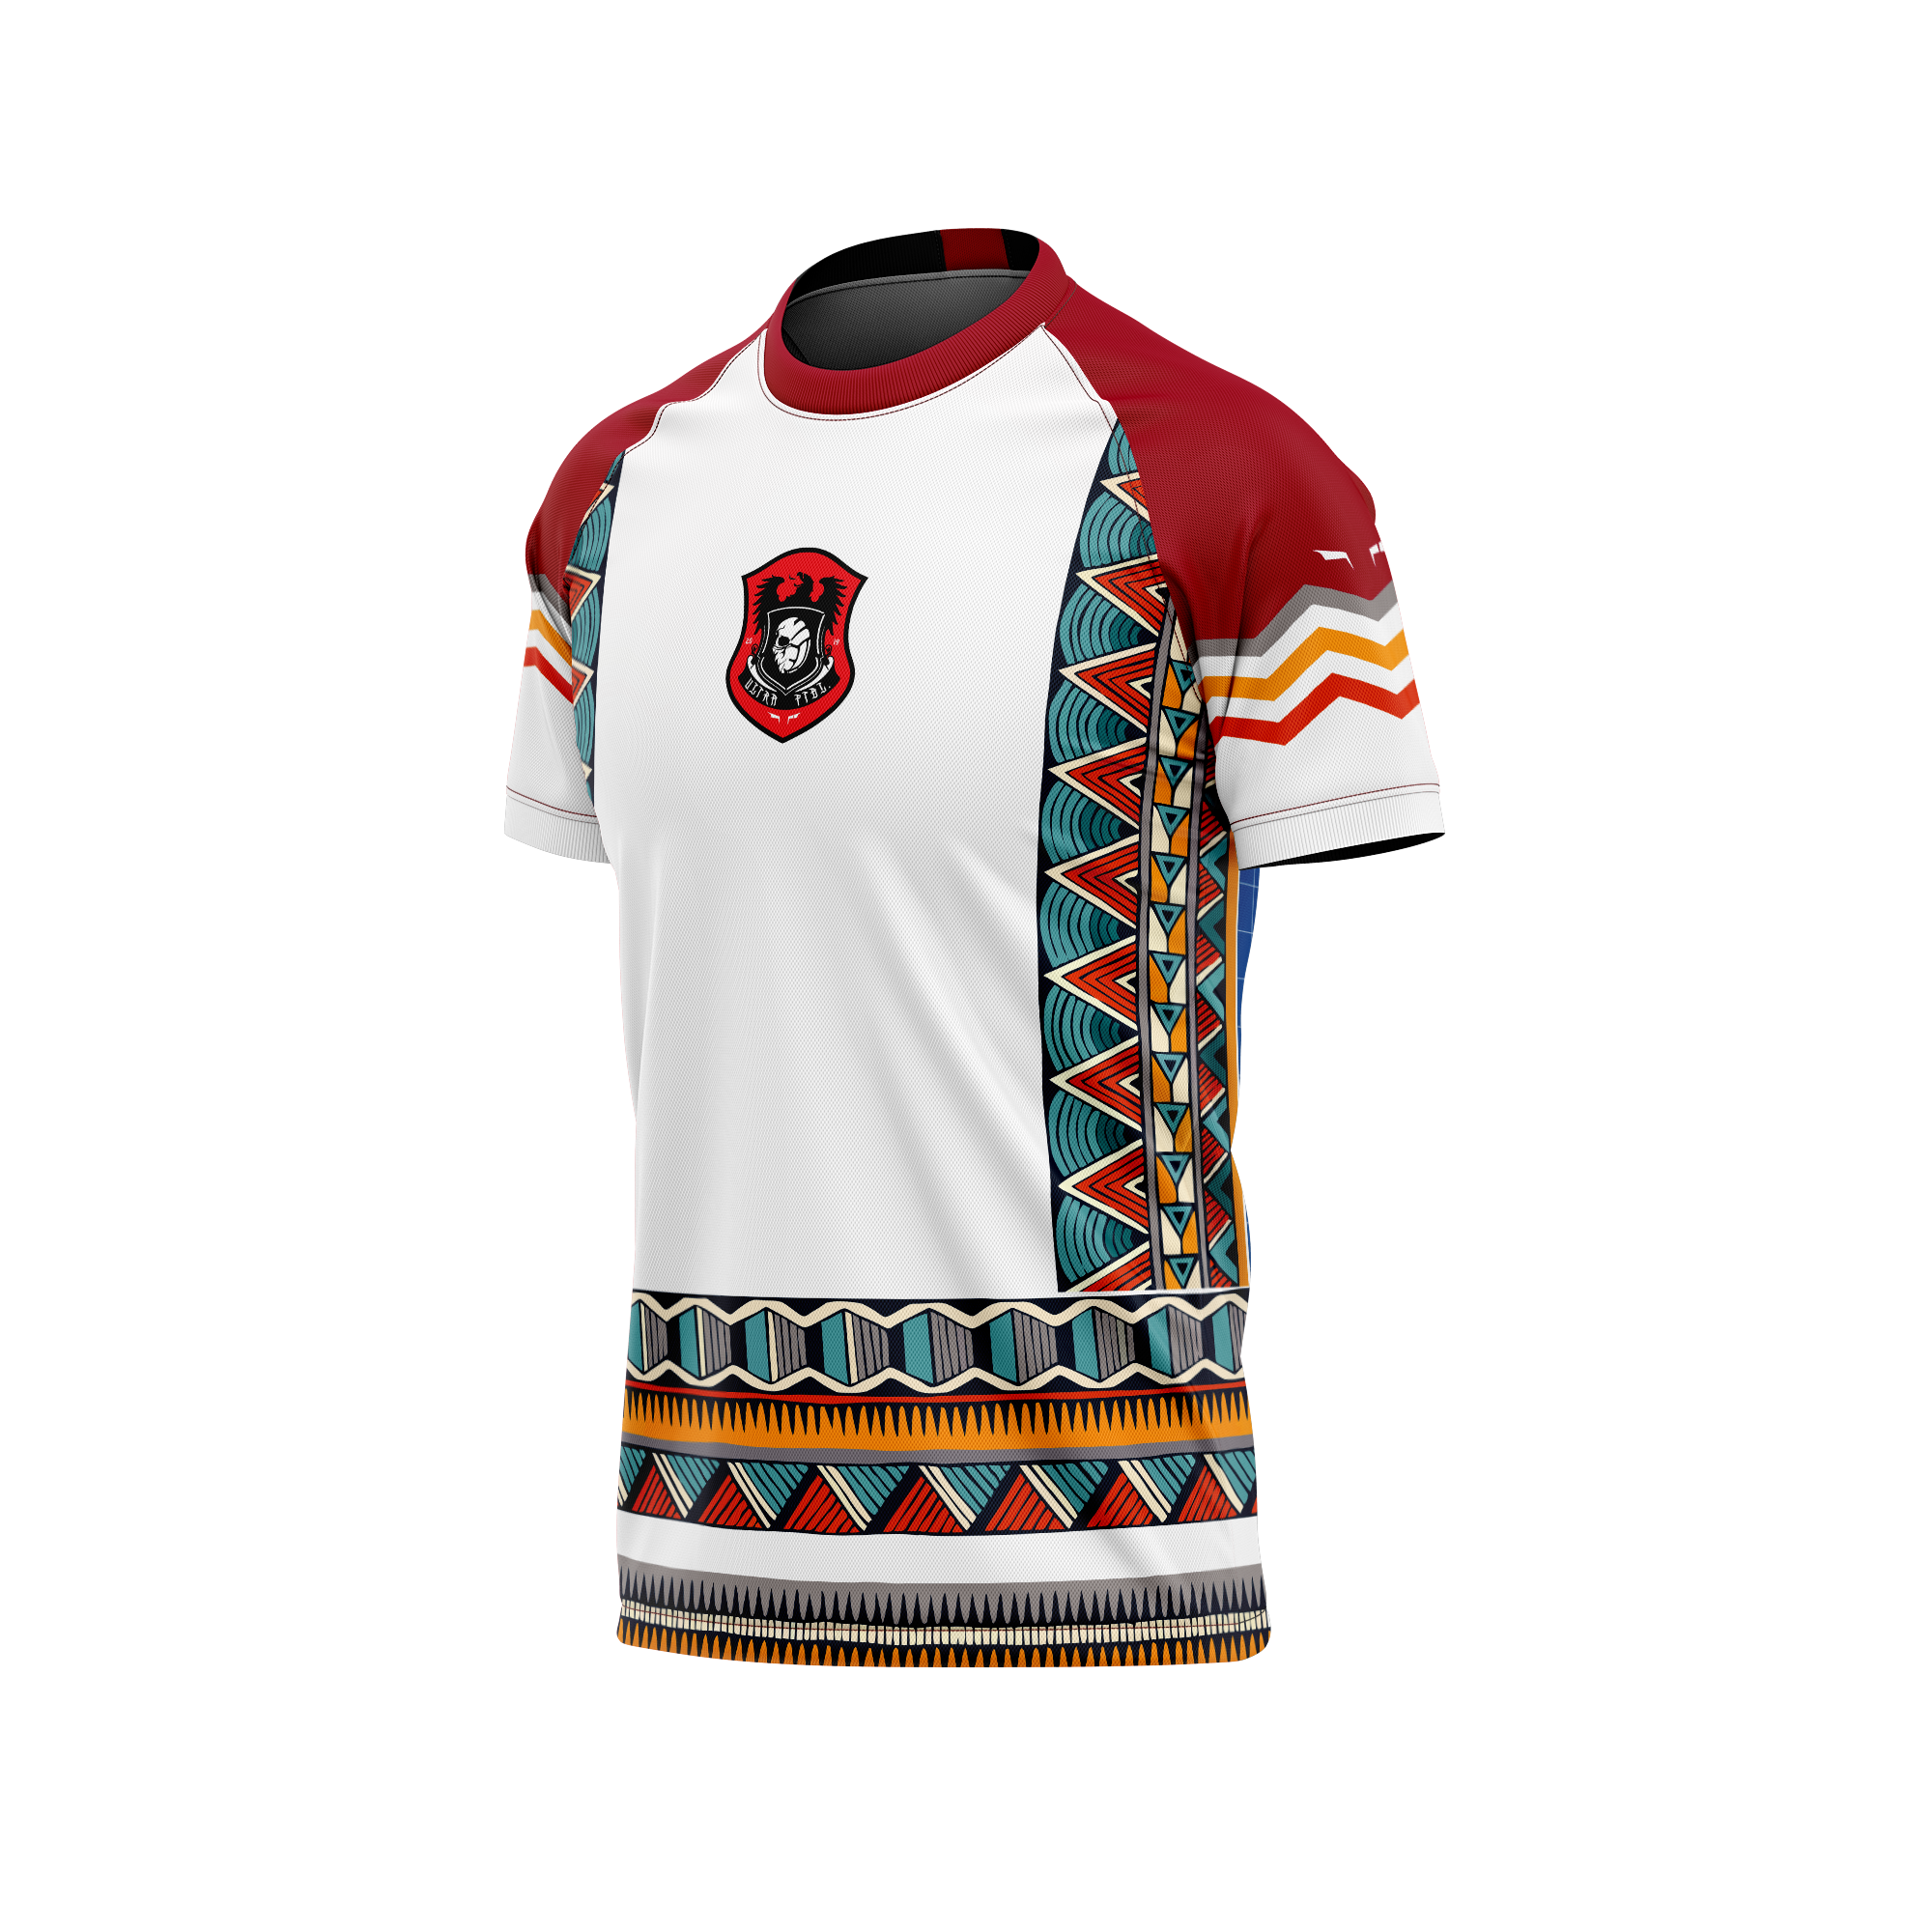 Ultras - Nigeria Limited Edition Custom Football Jersey